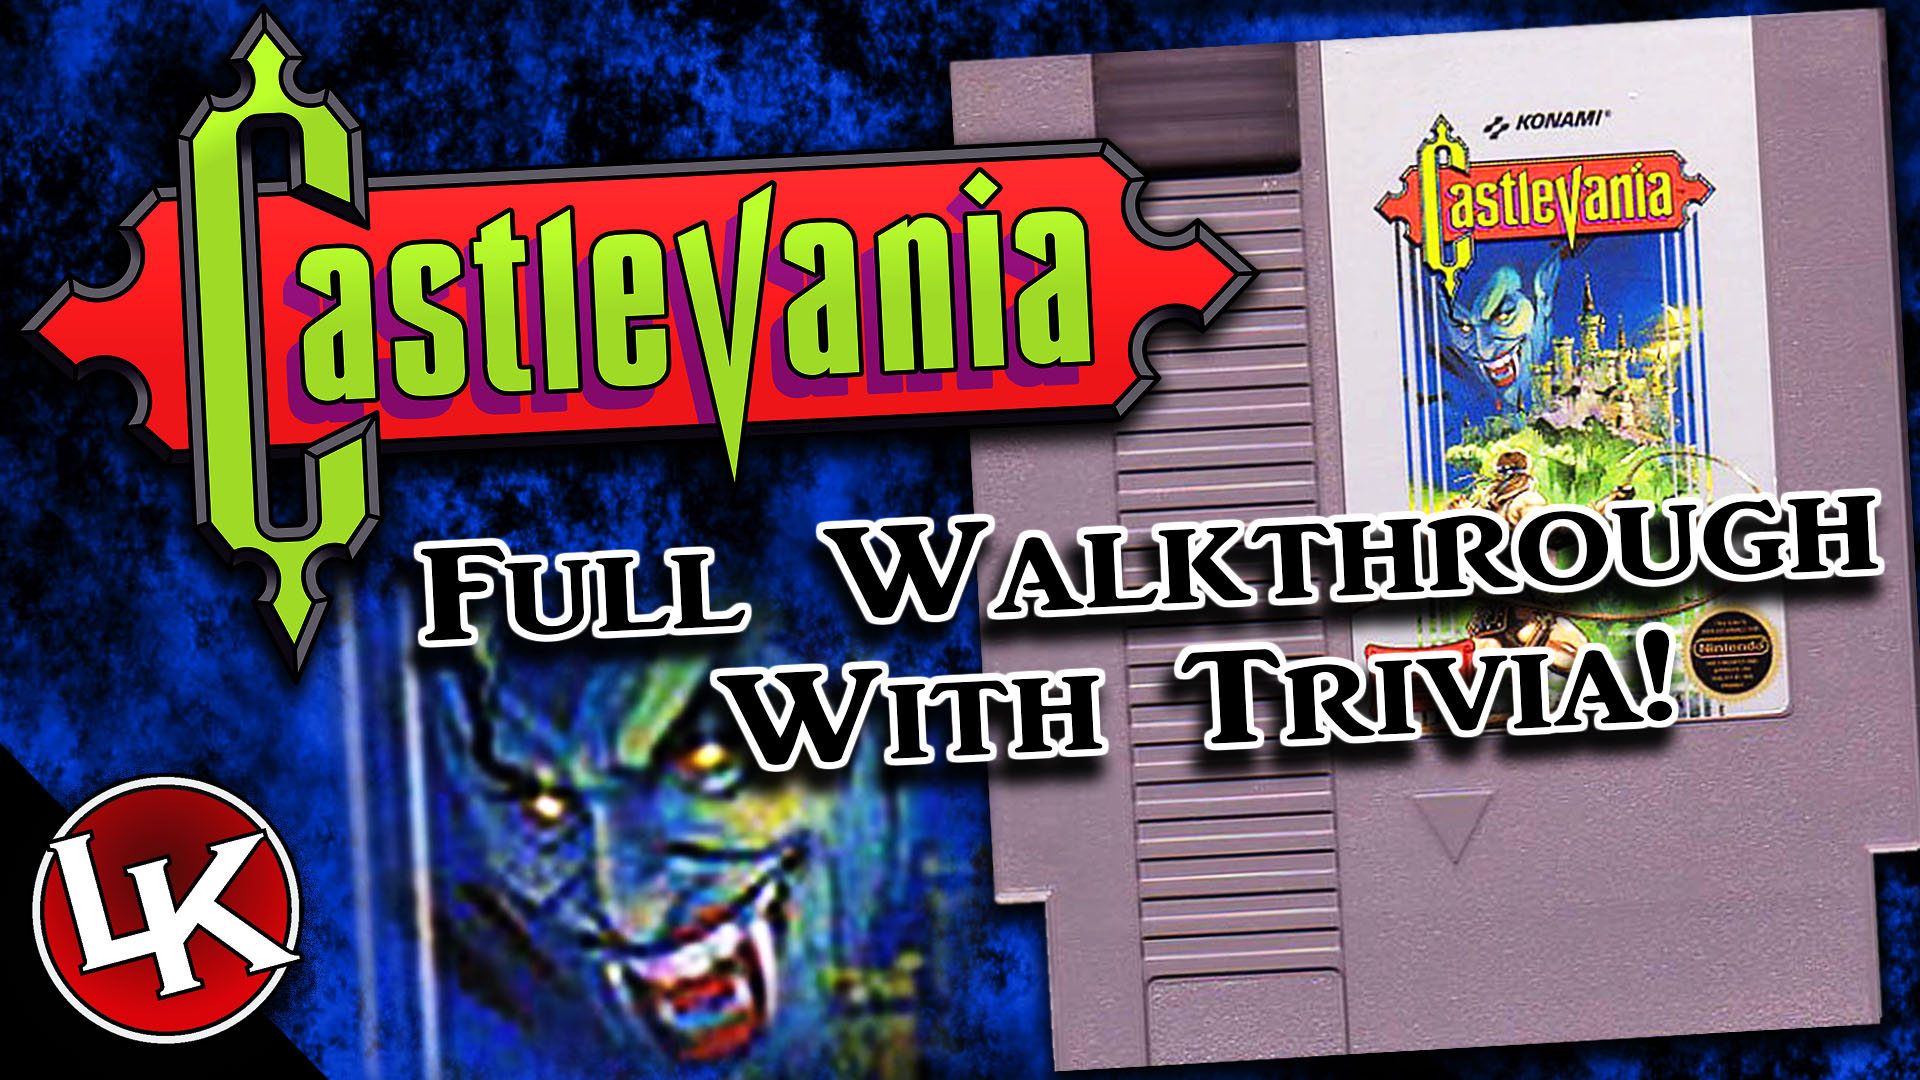 Castlevania NES | Full Walkthrough With Trivia